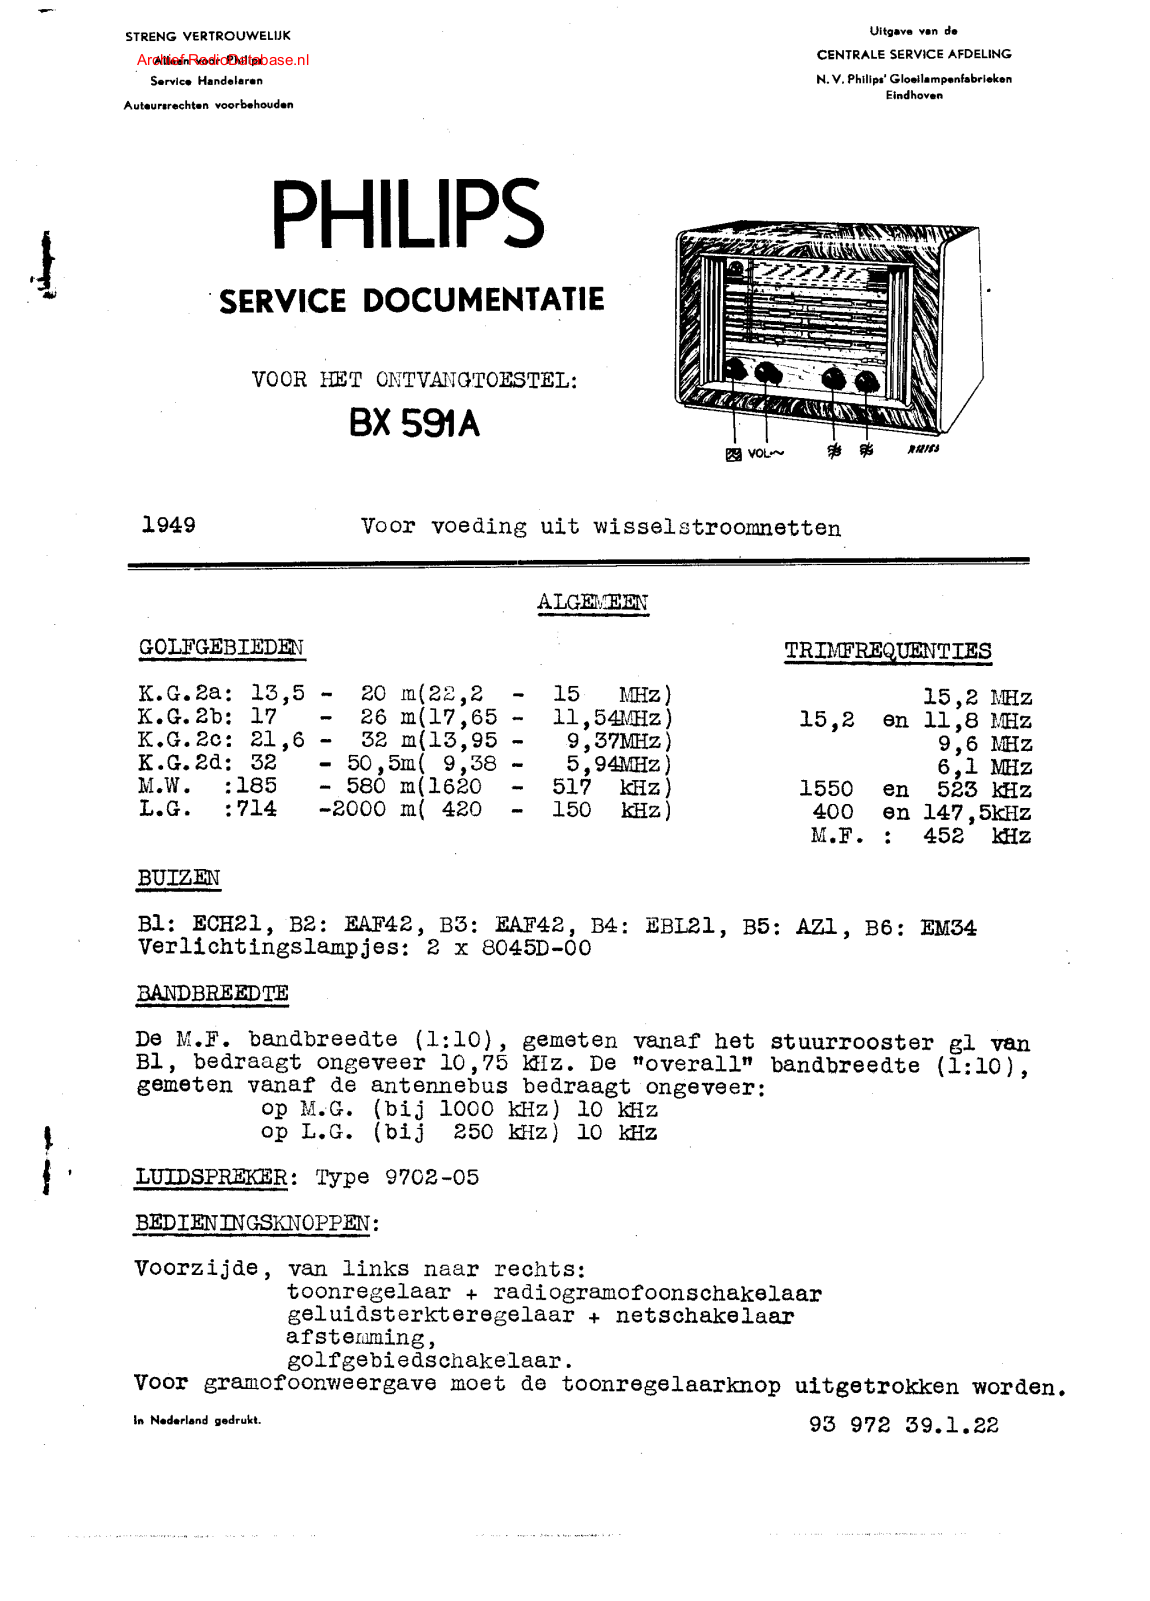 Philips BX591A Schematic